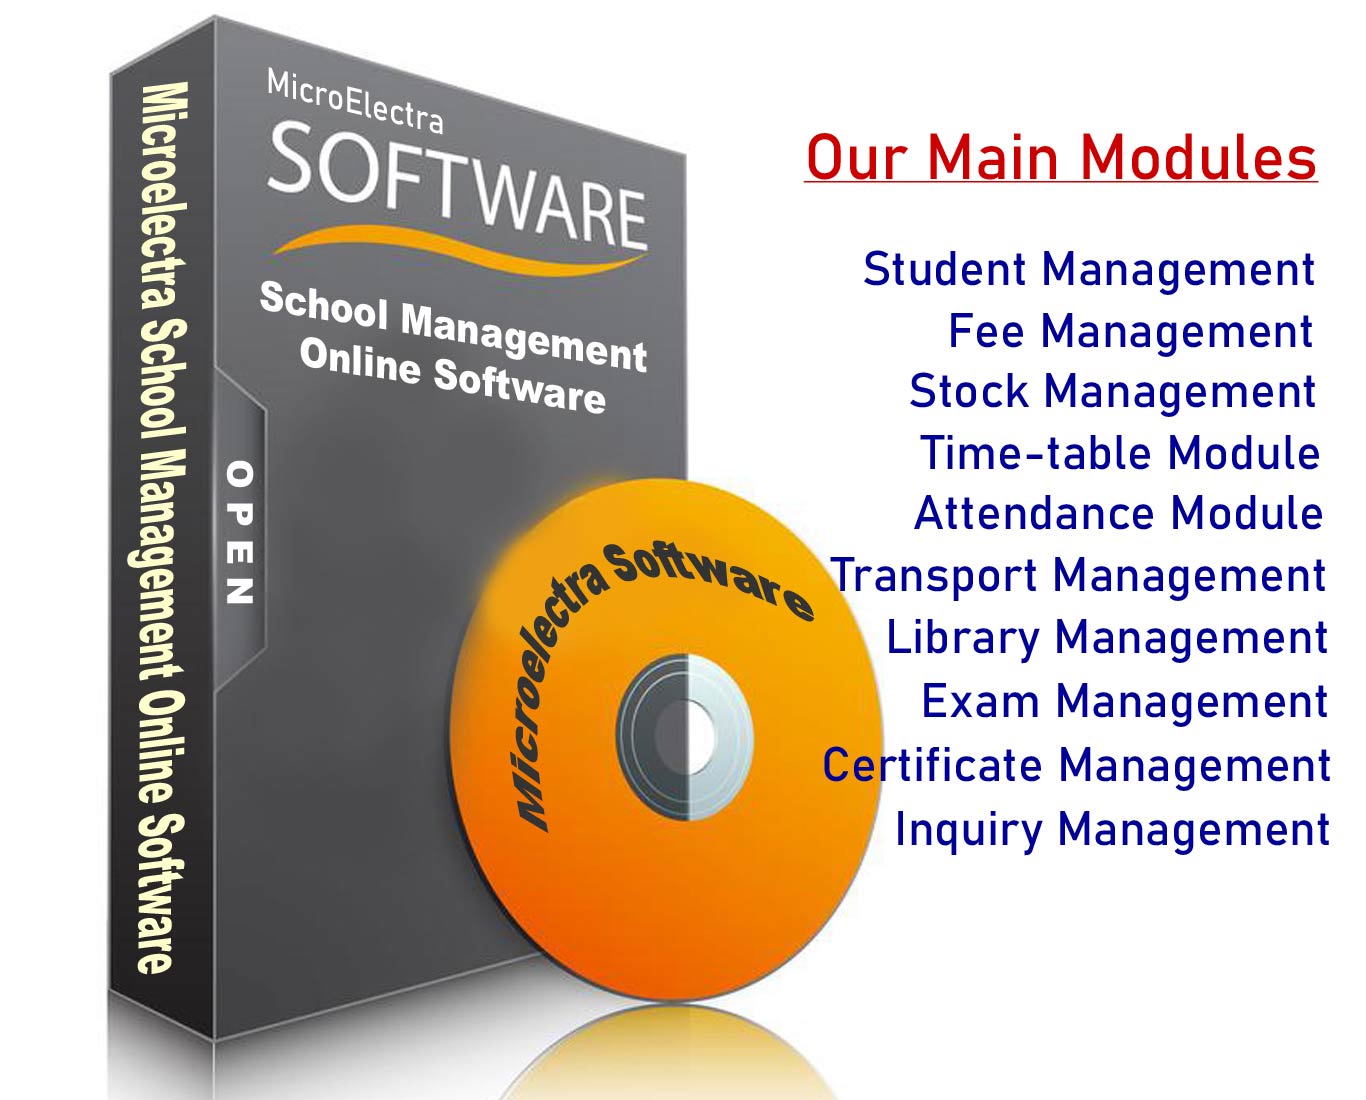 School Management Online Software for Schools and Pre-schools